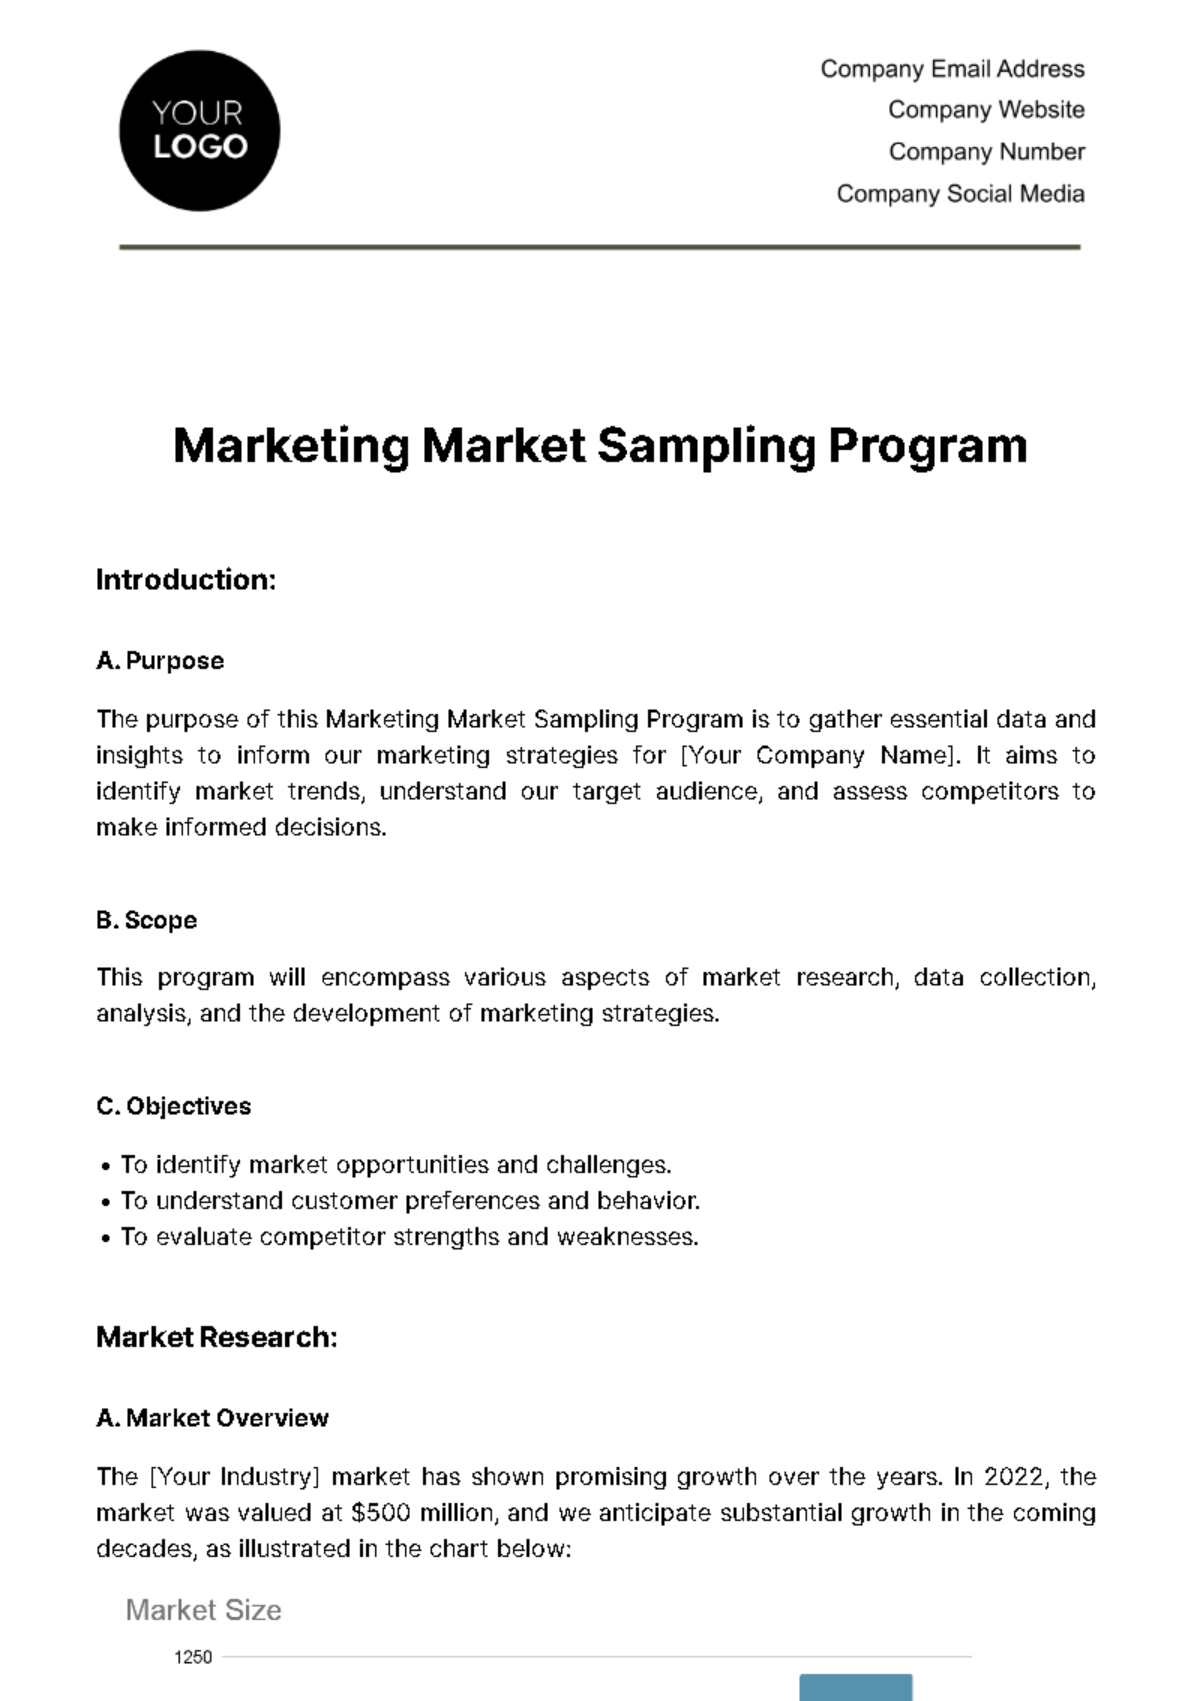 Free Marketing Market Sampling Program Template